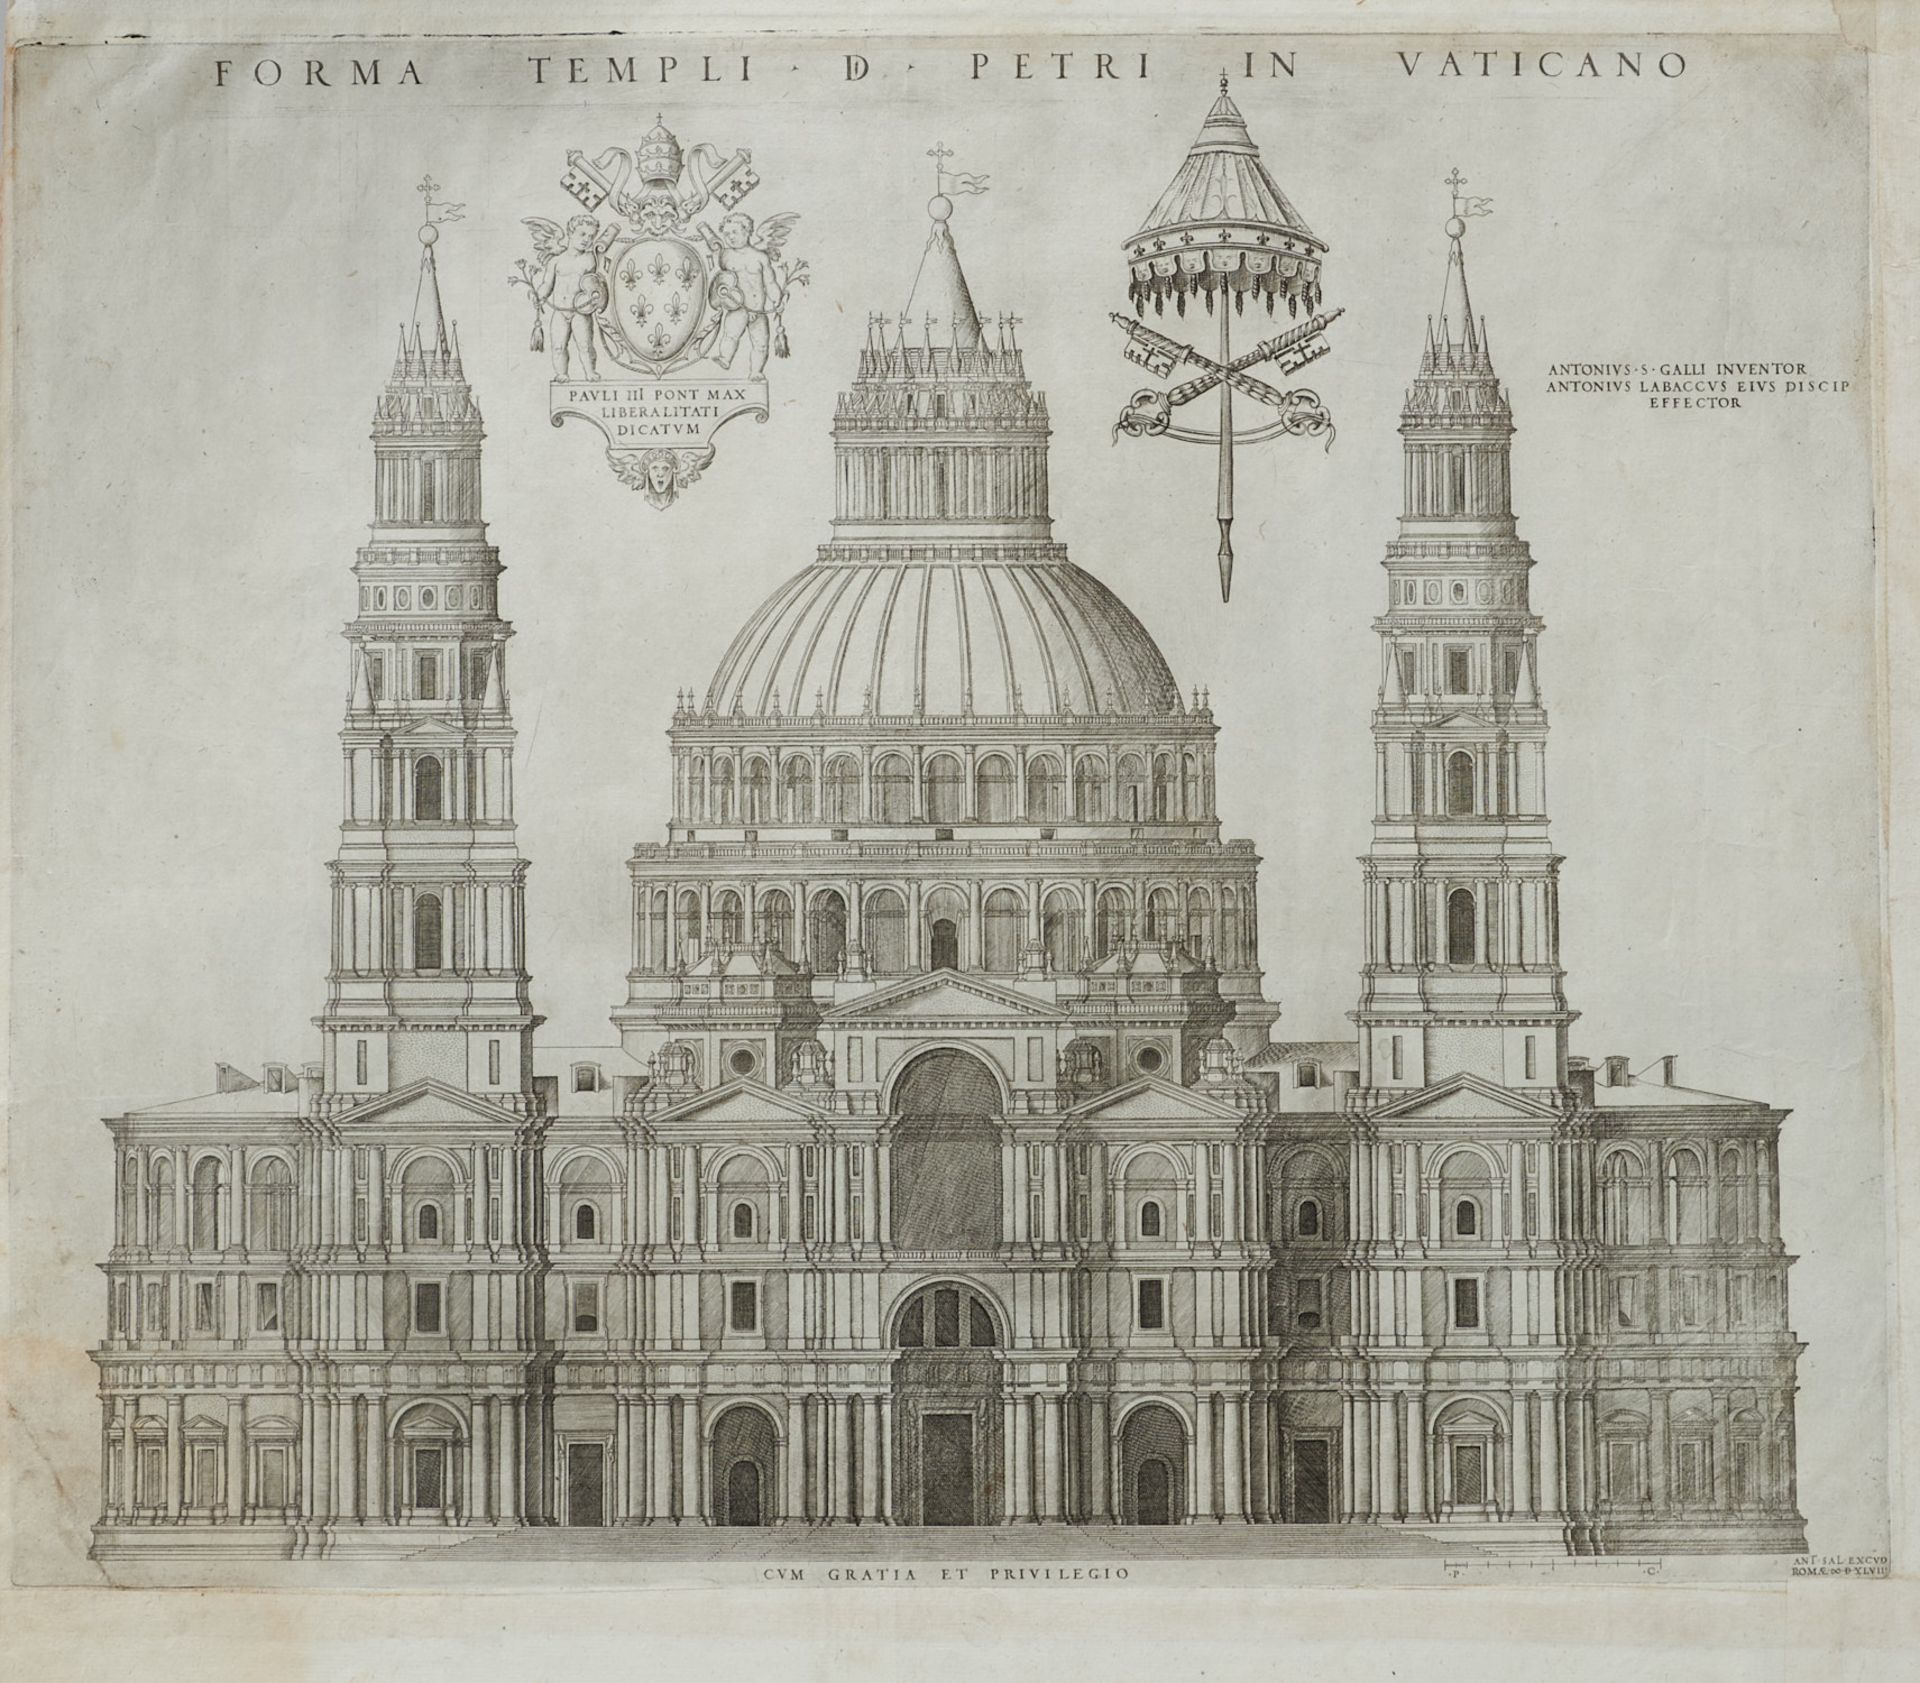 Labacco, Antonio da (Vigevano ca. 1495 - ca. 1567), "Forma templi D. Petri in Vaticano". Fassade des